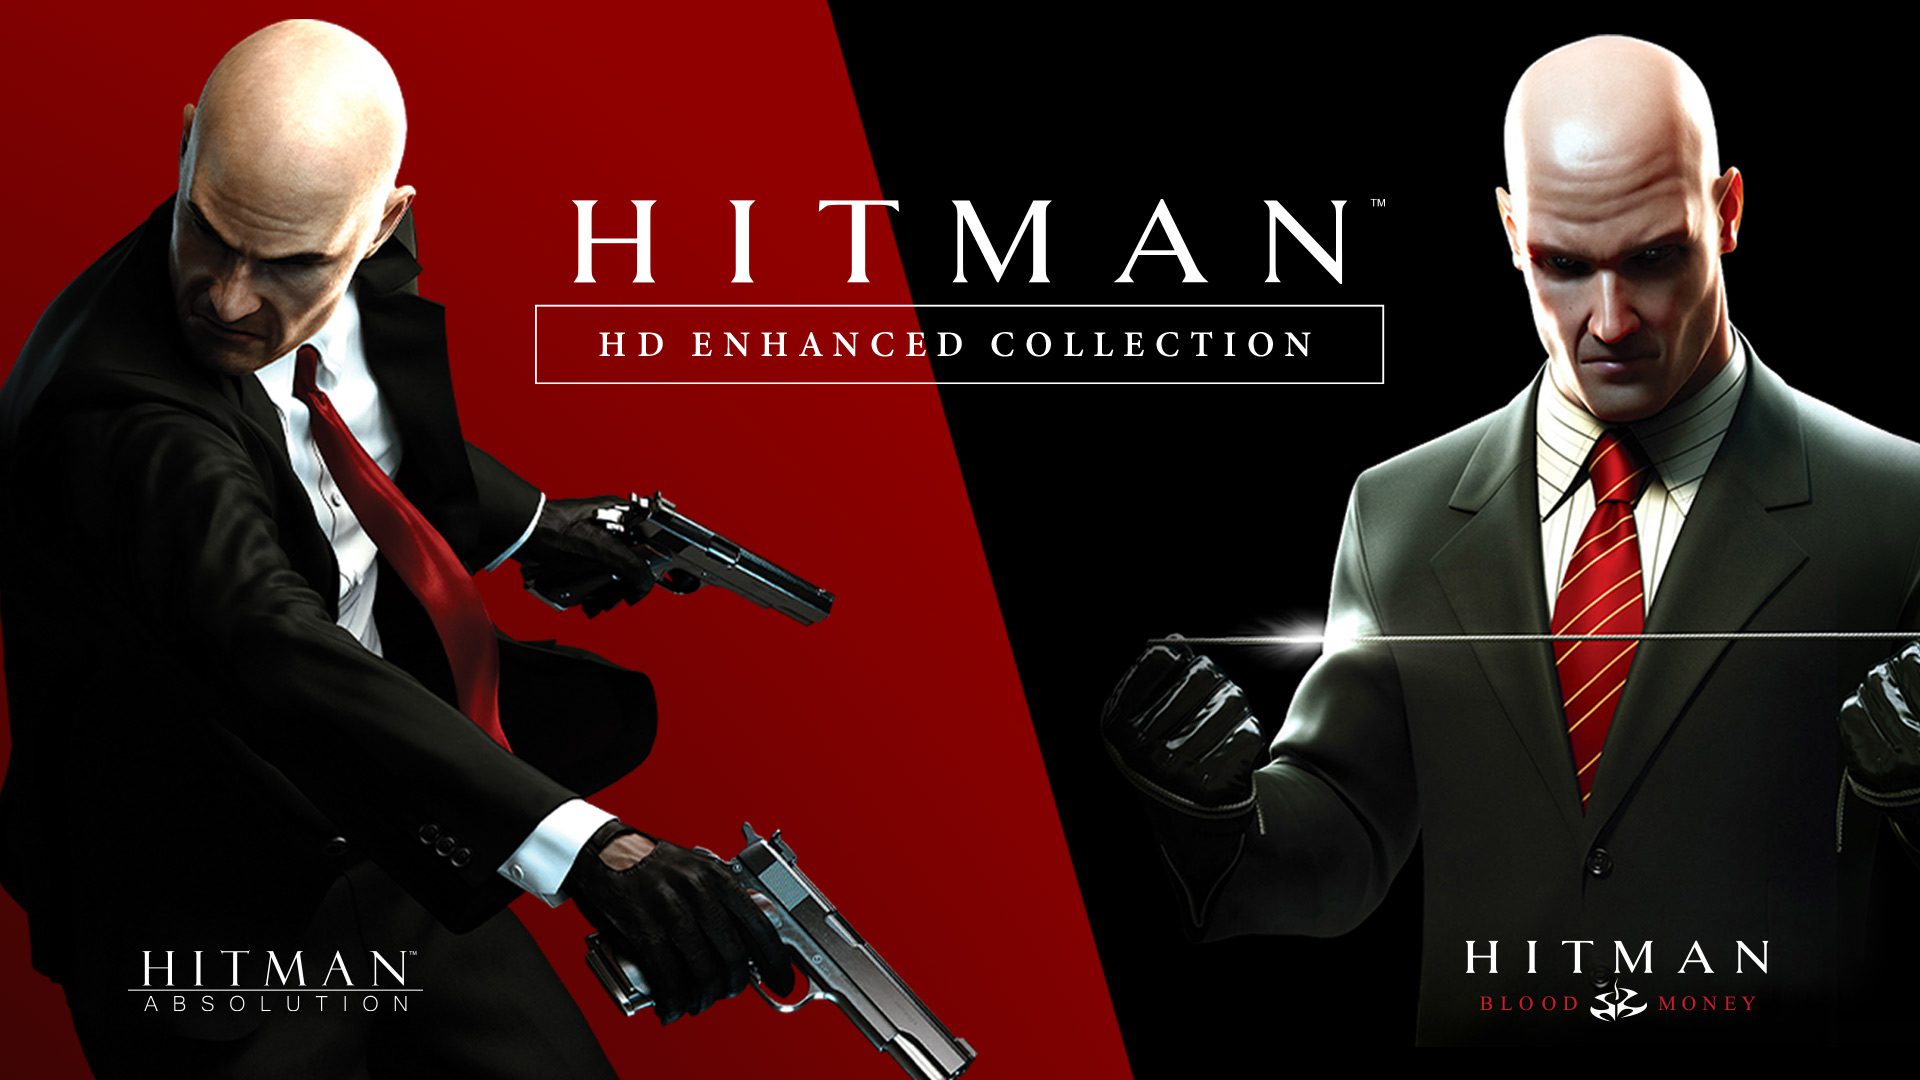 Hitman HD Enhanced Collection announced